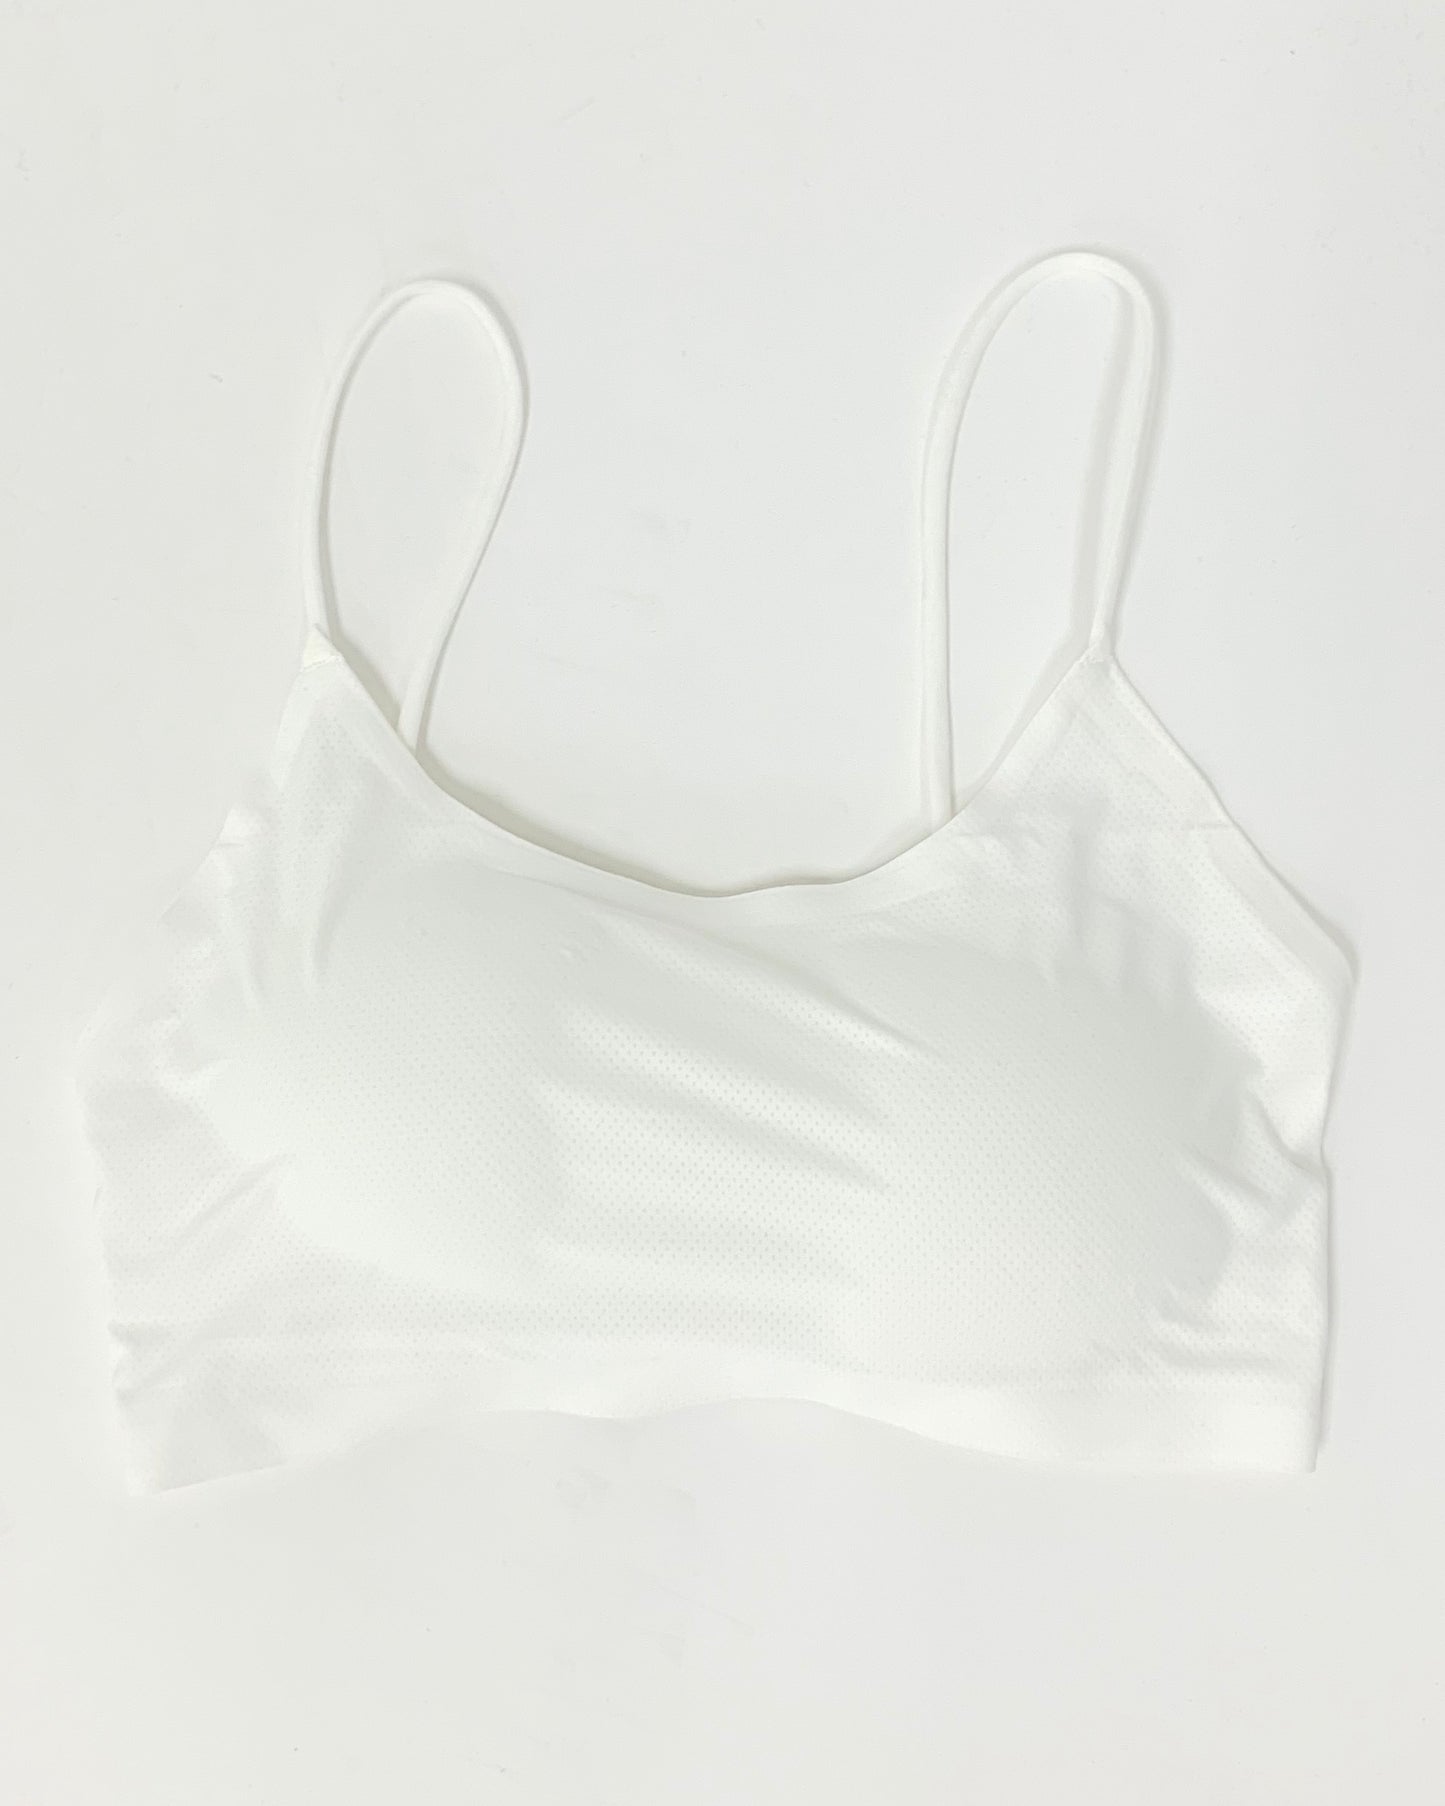 ivory strappy back bra top *pre-order*